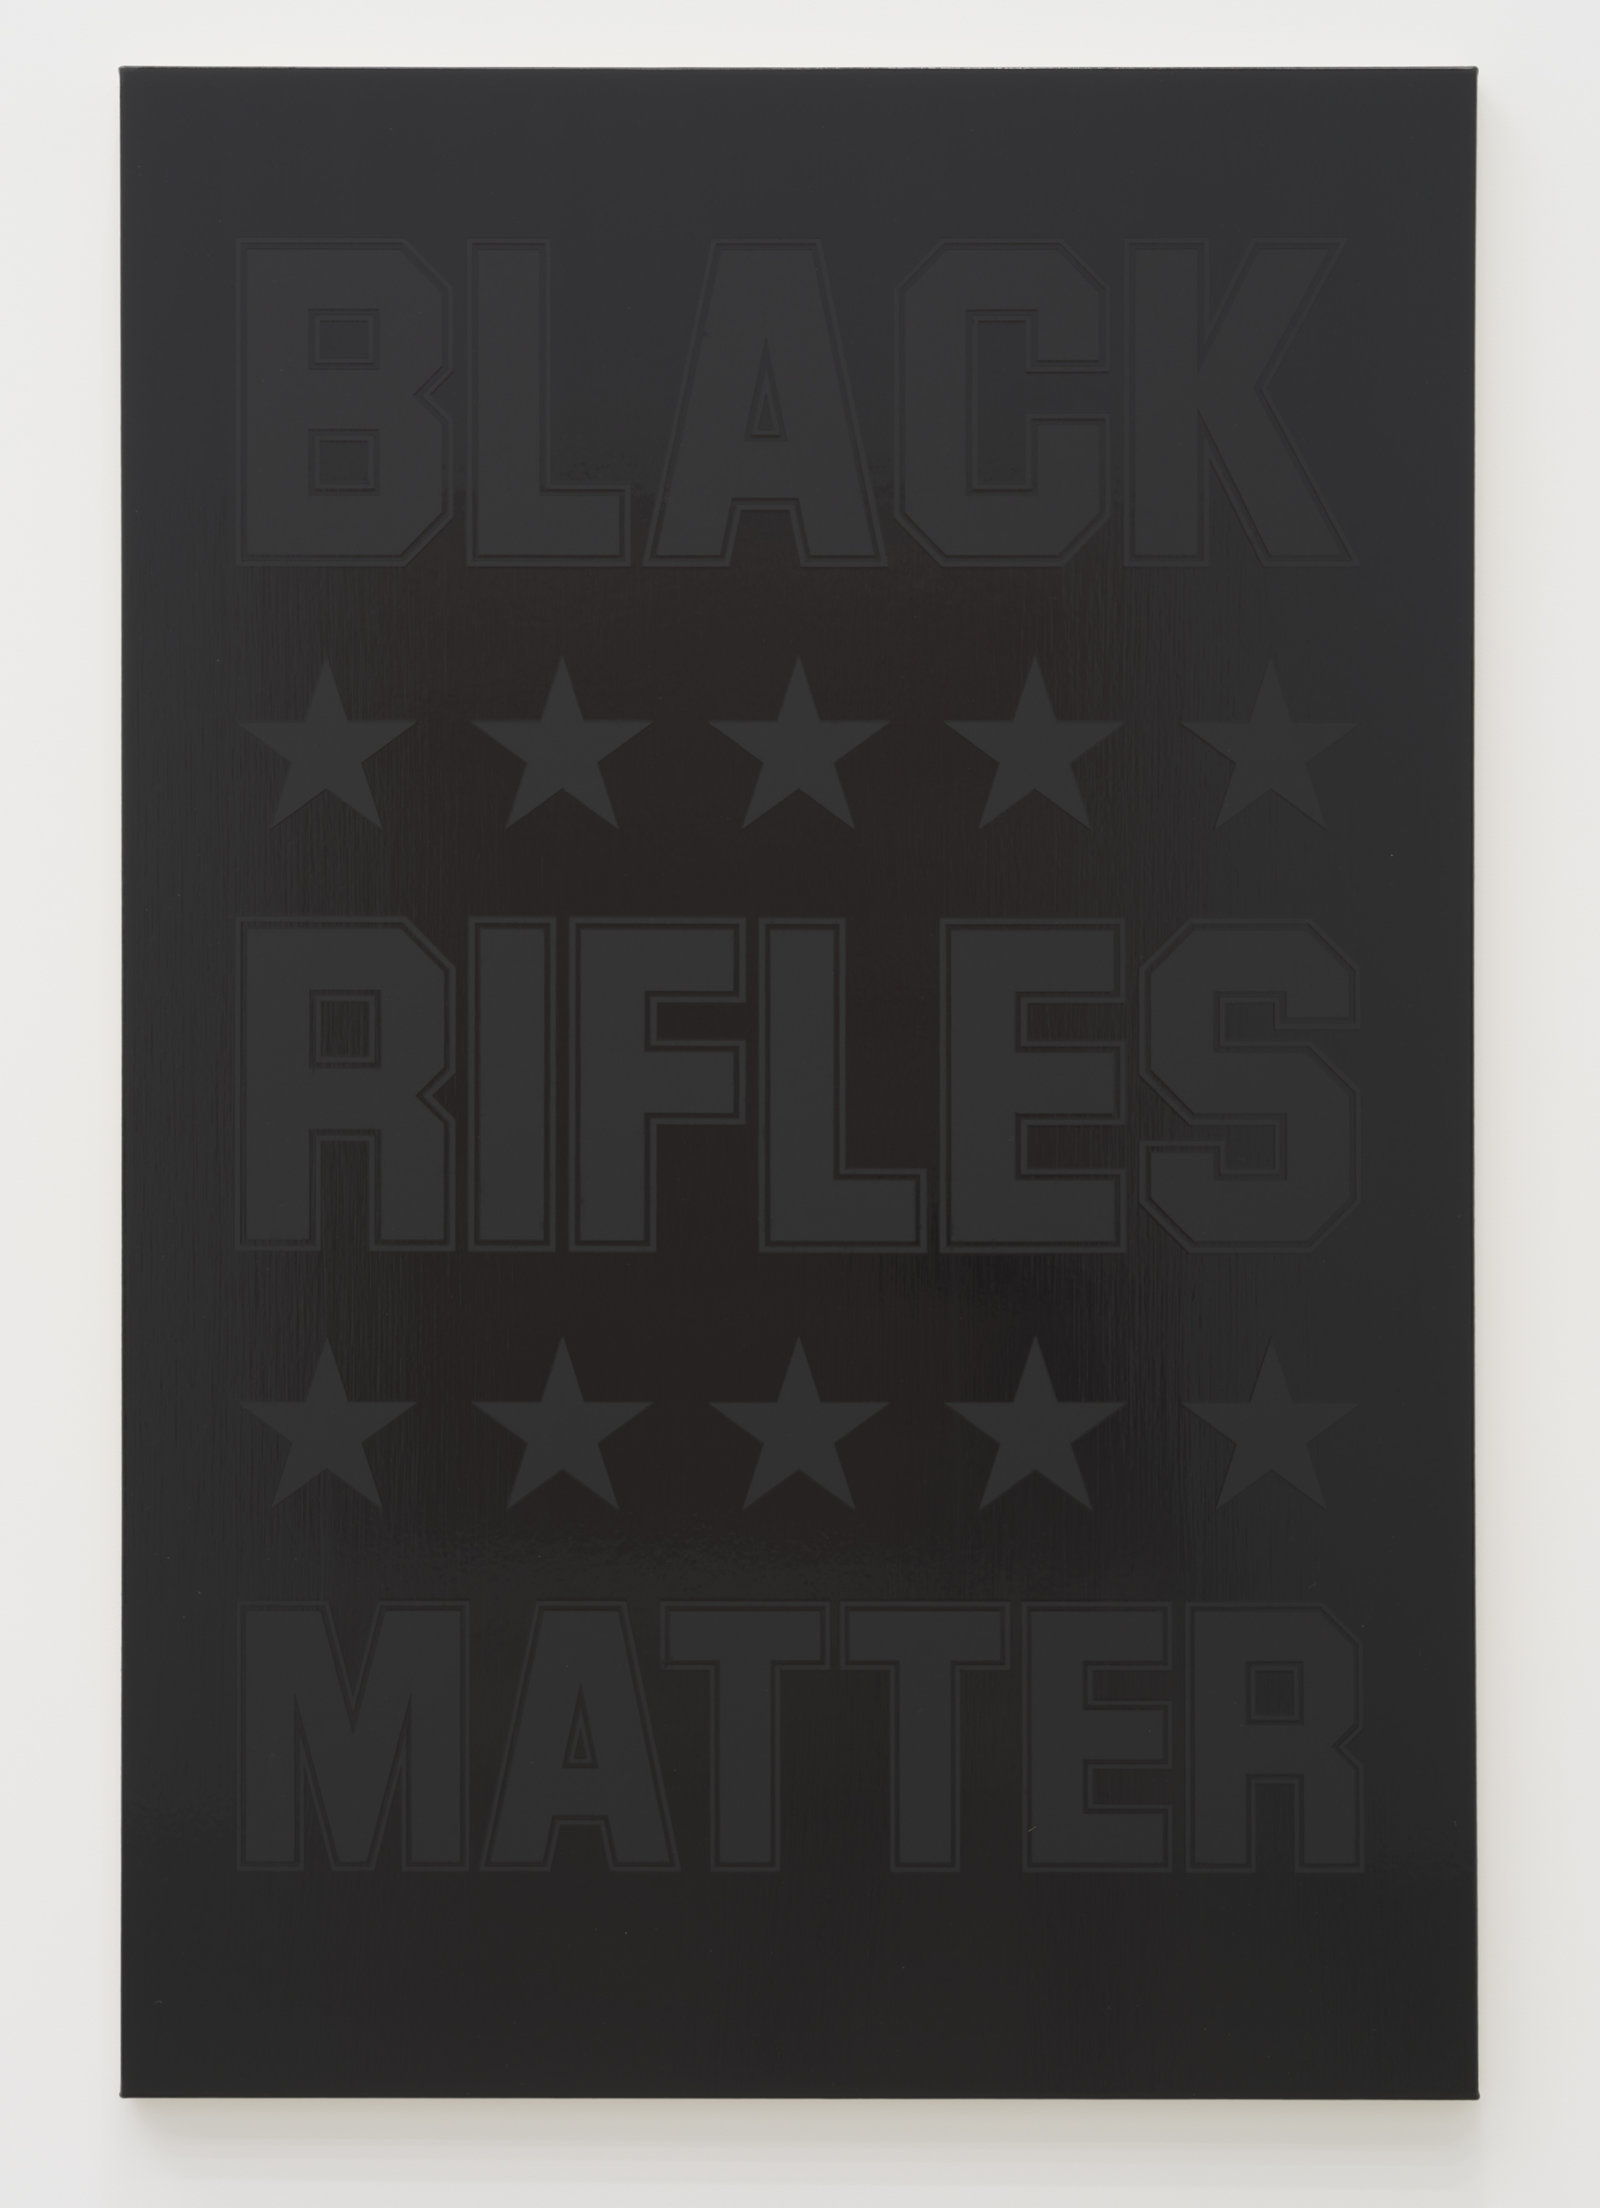 Ron Terada, Black Rifles Matter, 2023, acrylic on canvas, 60 x 40 in. (152 x 102 cm)